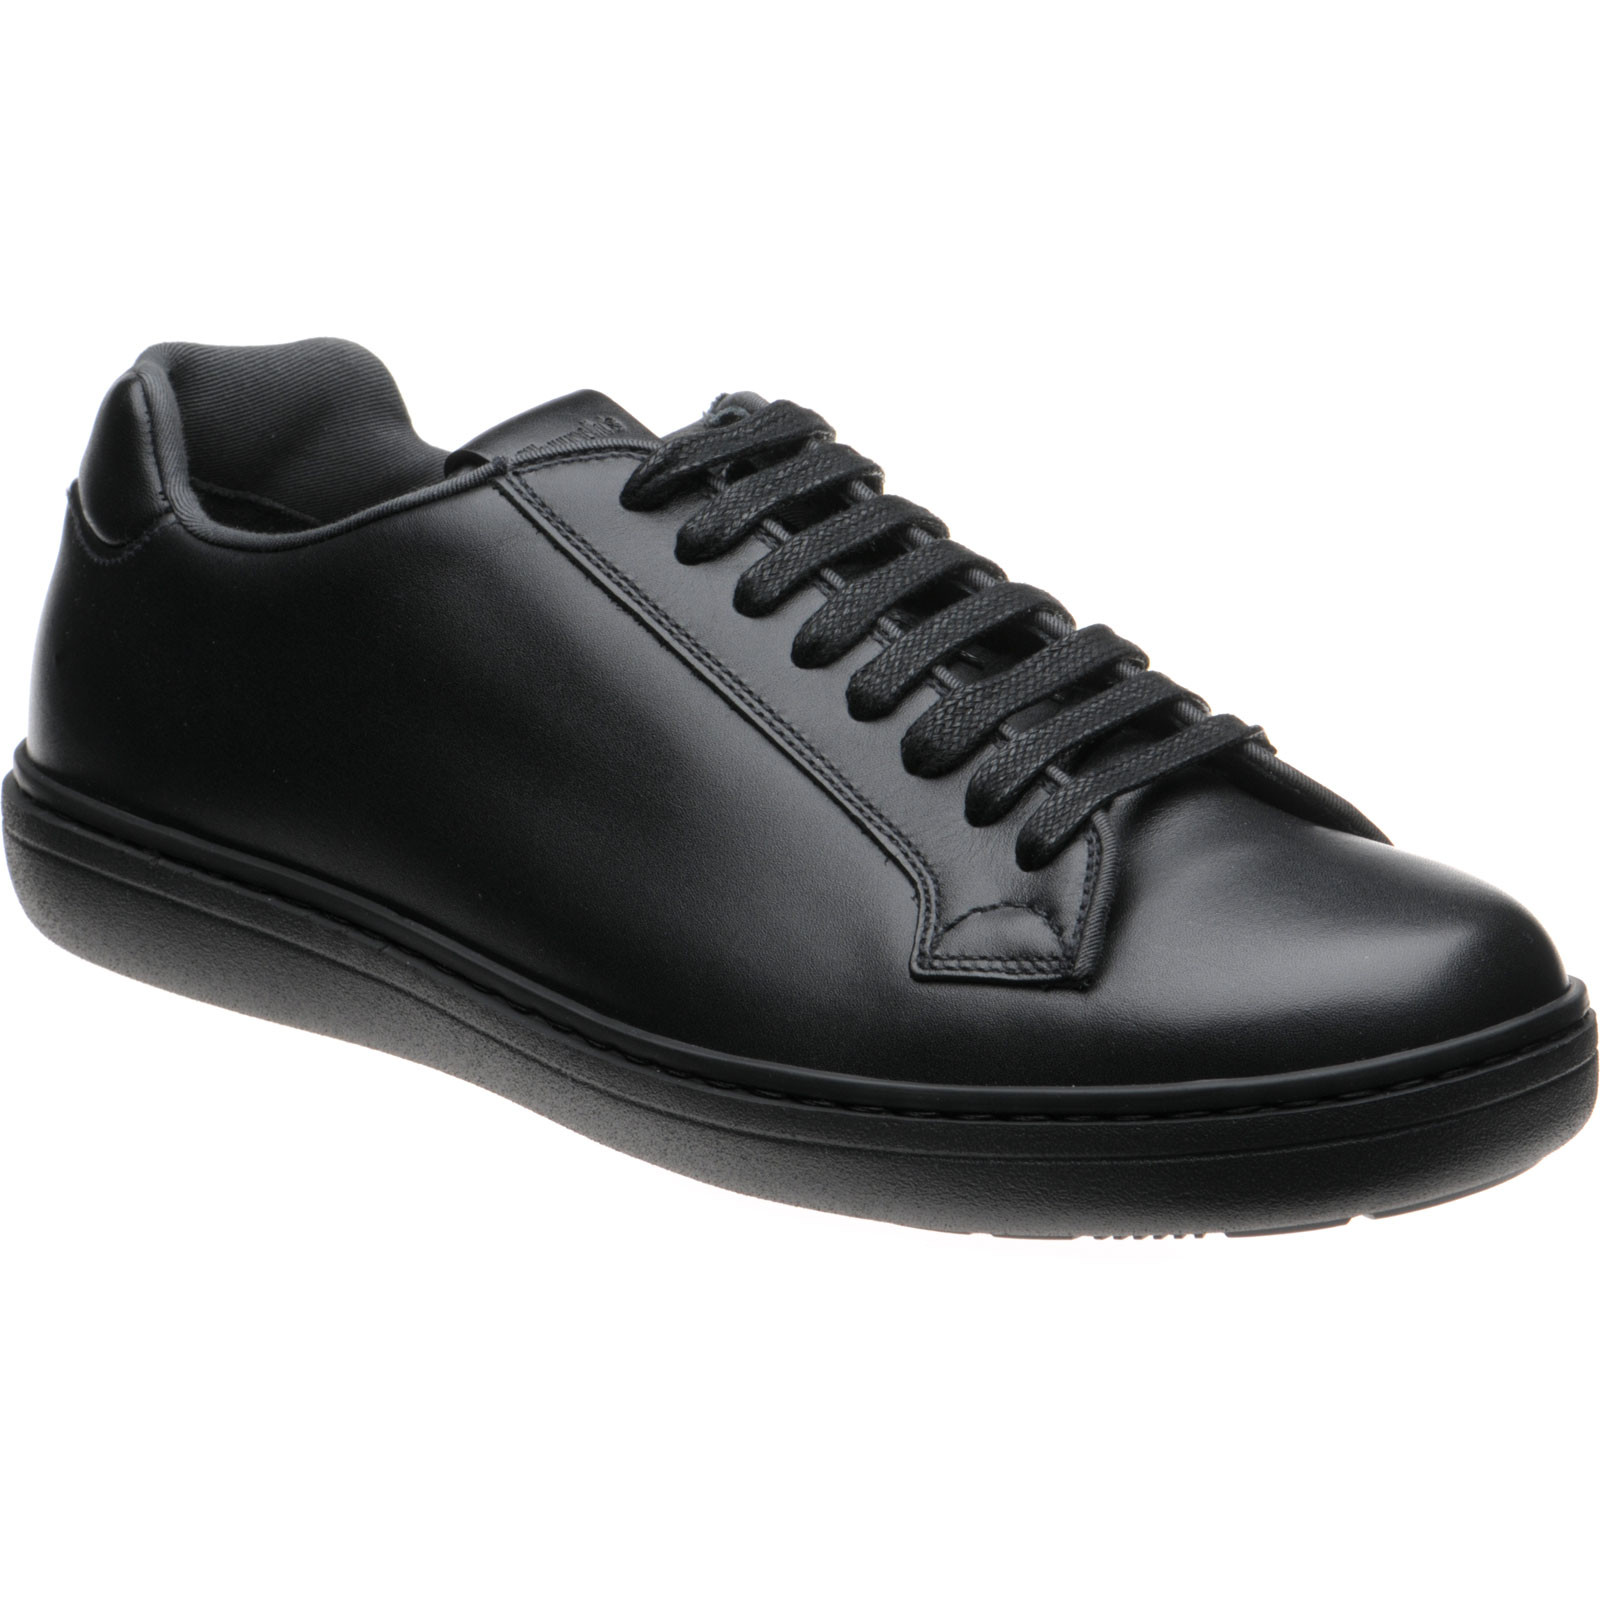 Church shoes | Church Custom Grade | Boland rubber-soled in Black Calf ...